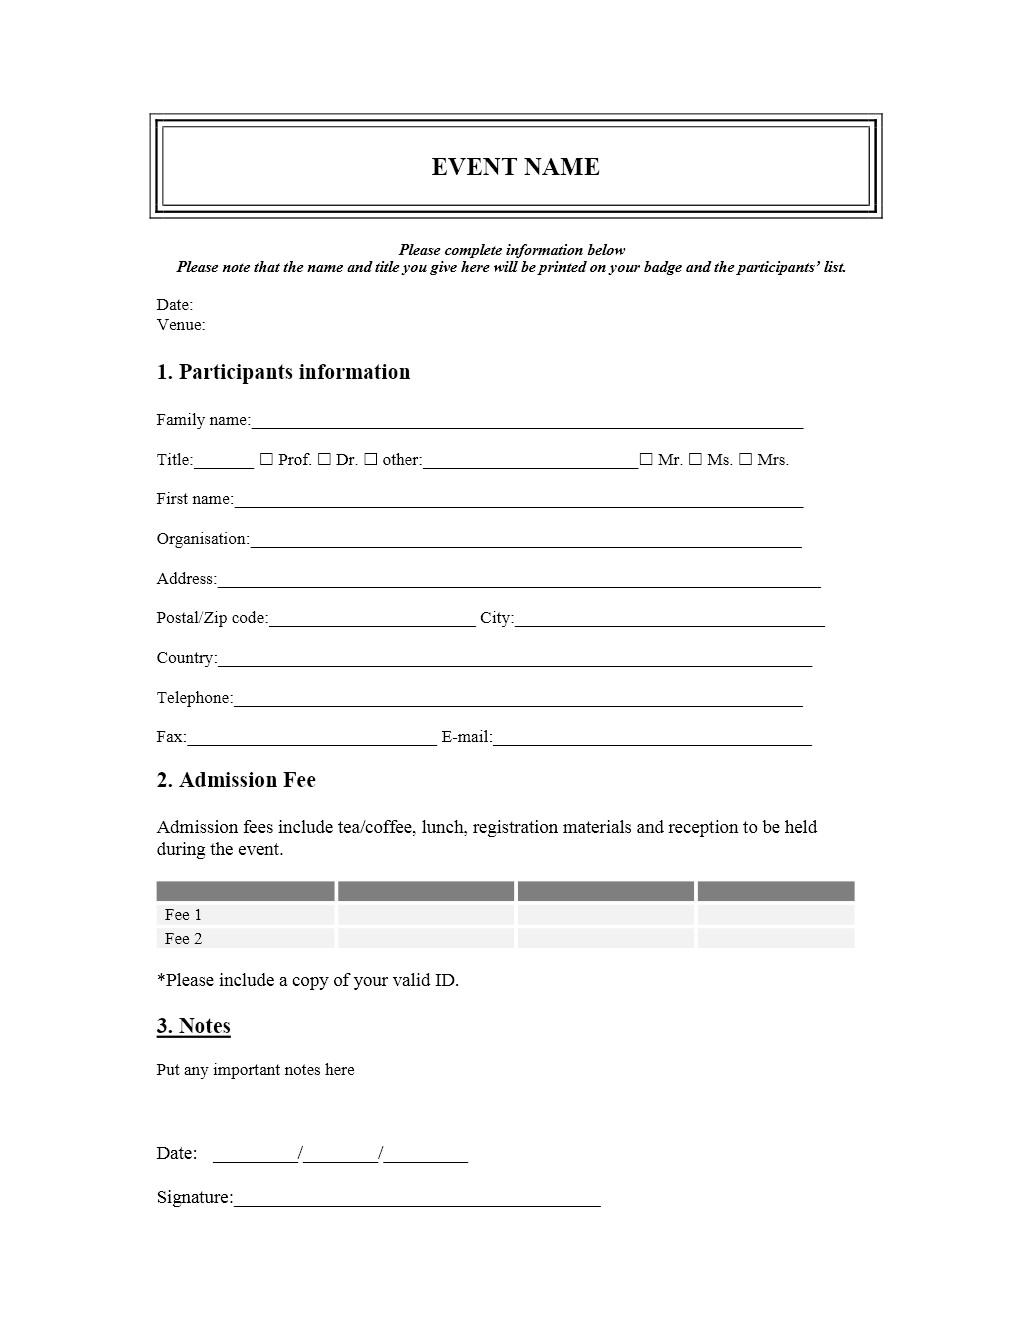 Free Registration forms Template event Registration form